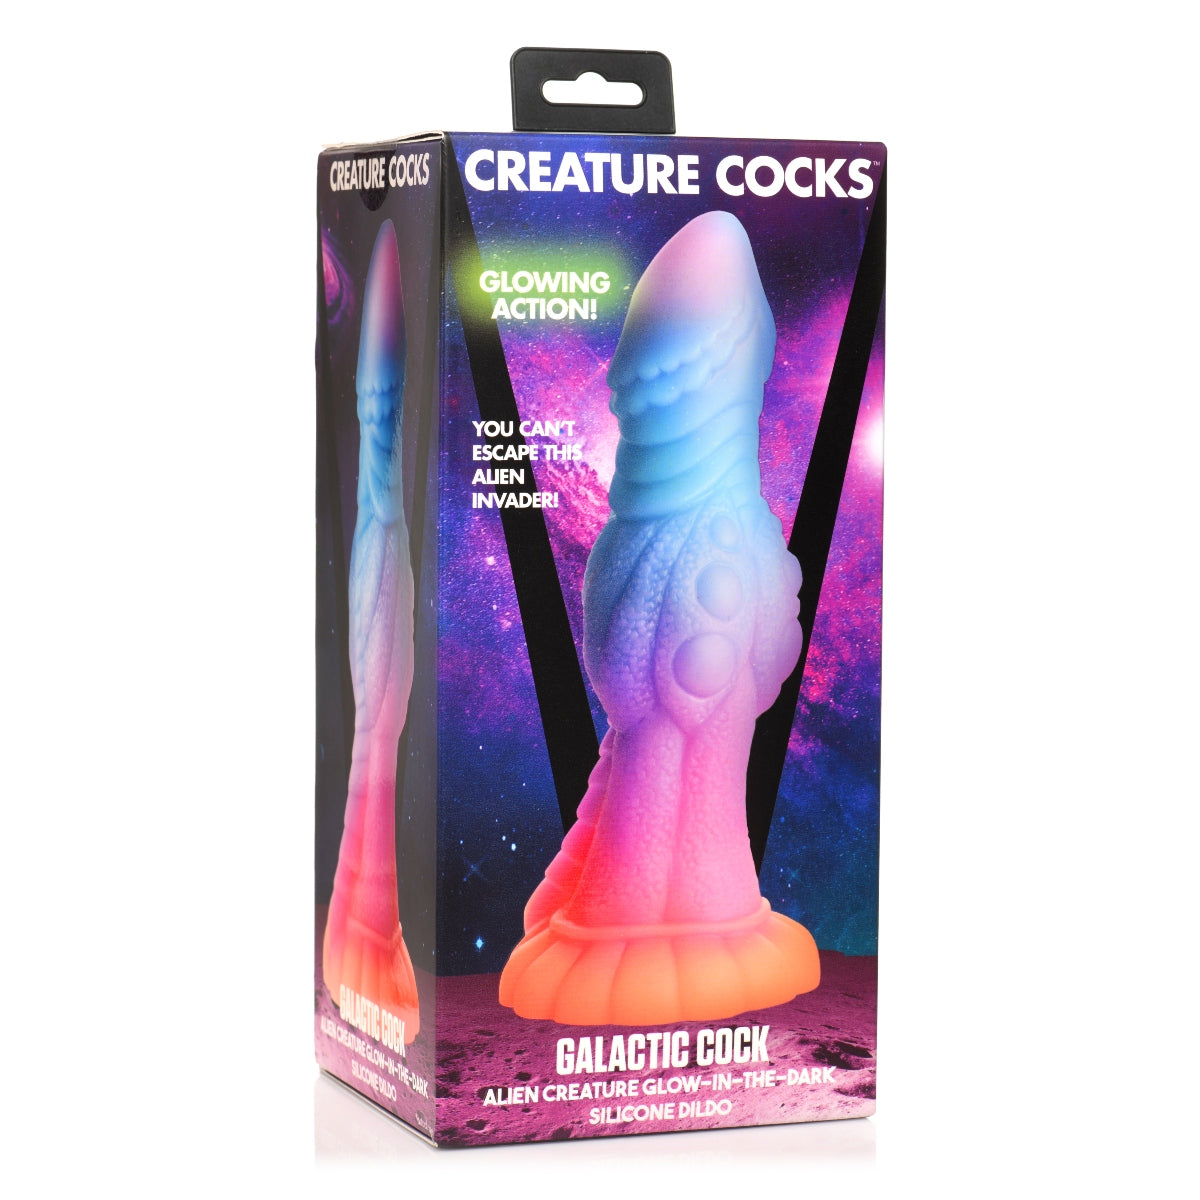 Creature Cocks Galactic Cock Alien Creature Glow In The Dark Silicone Dildo Blue Pink Purple - Simply Pleasure